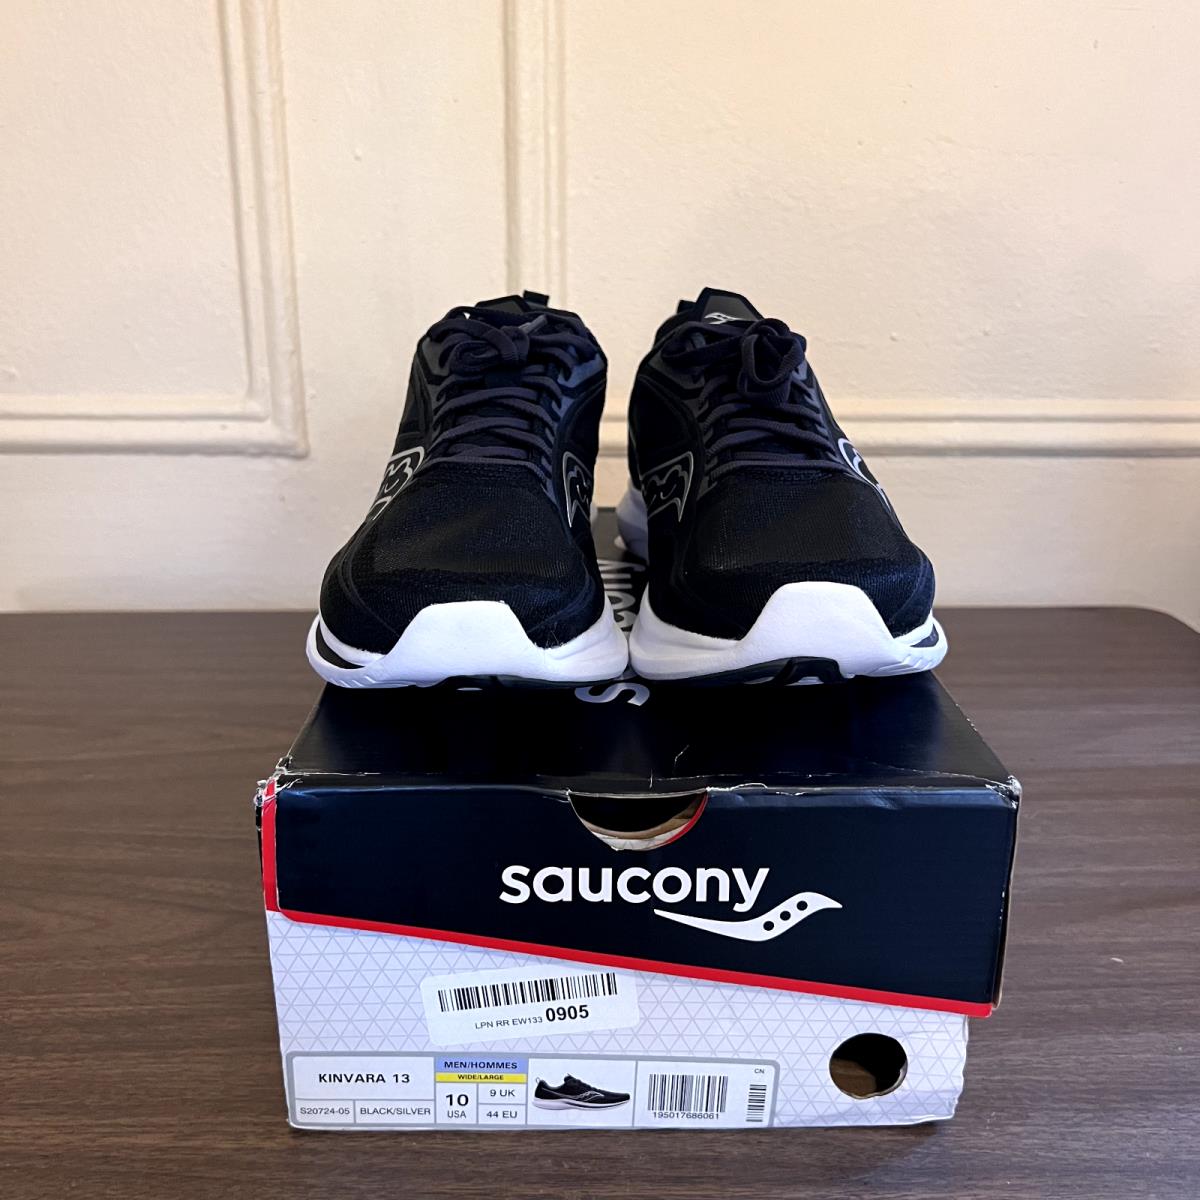 Saucony Kinvara 13 Men`s Running Shoe Size 10 Black/silver S20724-05